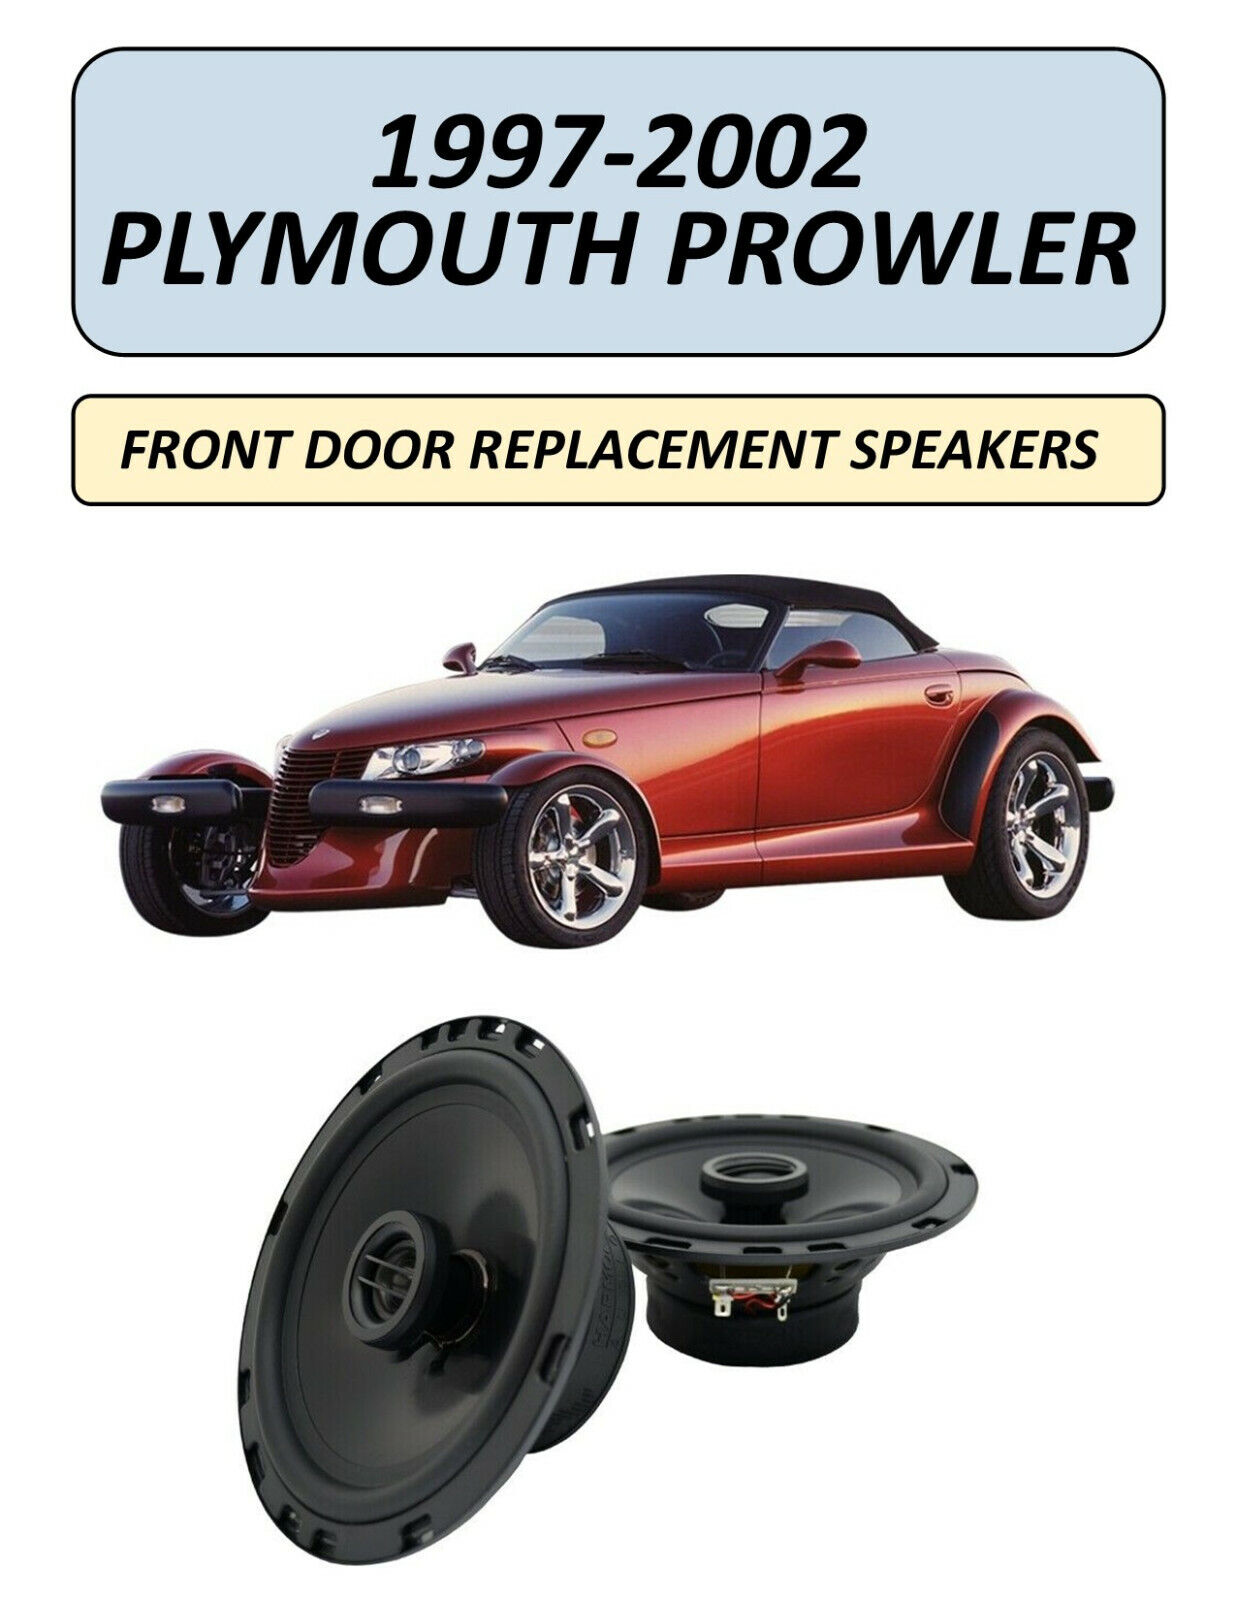 Fits Plymouth Prowler 1997-2002 Front Door Replacement Speakers, PIONEER